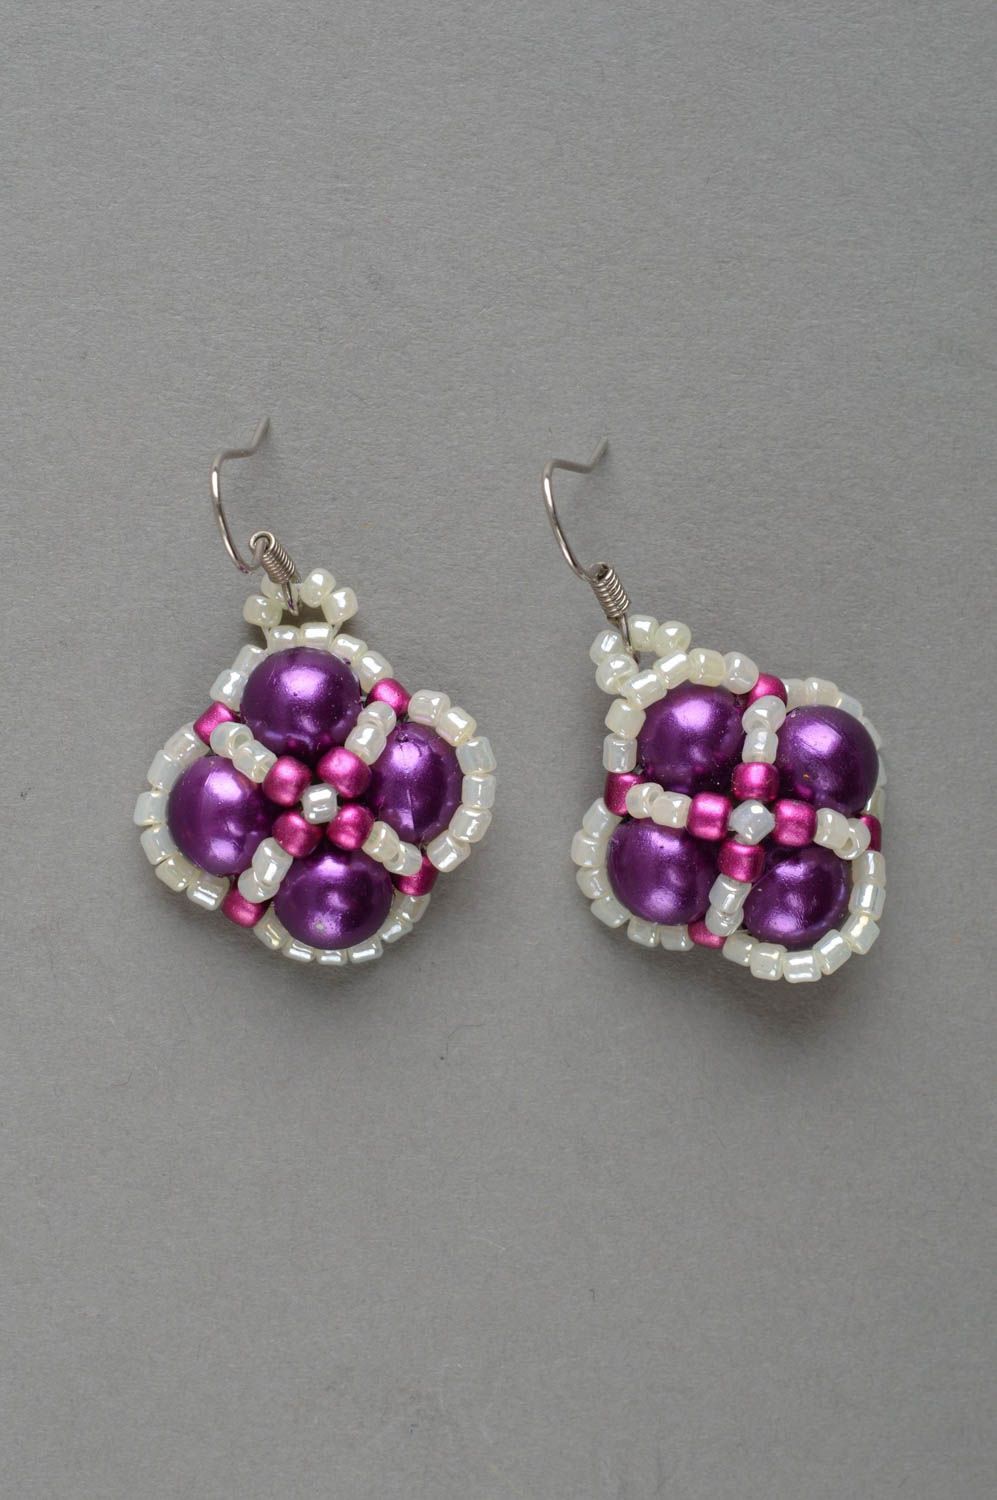 Beautiful handmade beaded earrings designer jewelry unusual gifts for her photo 2